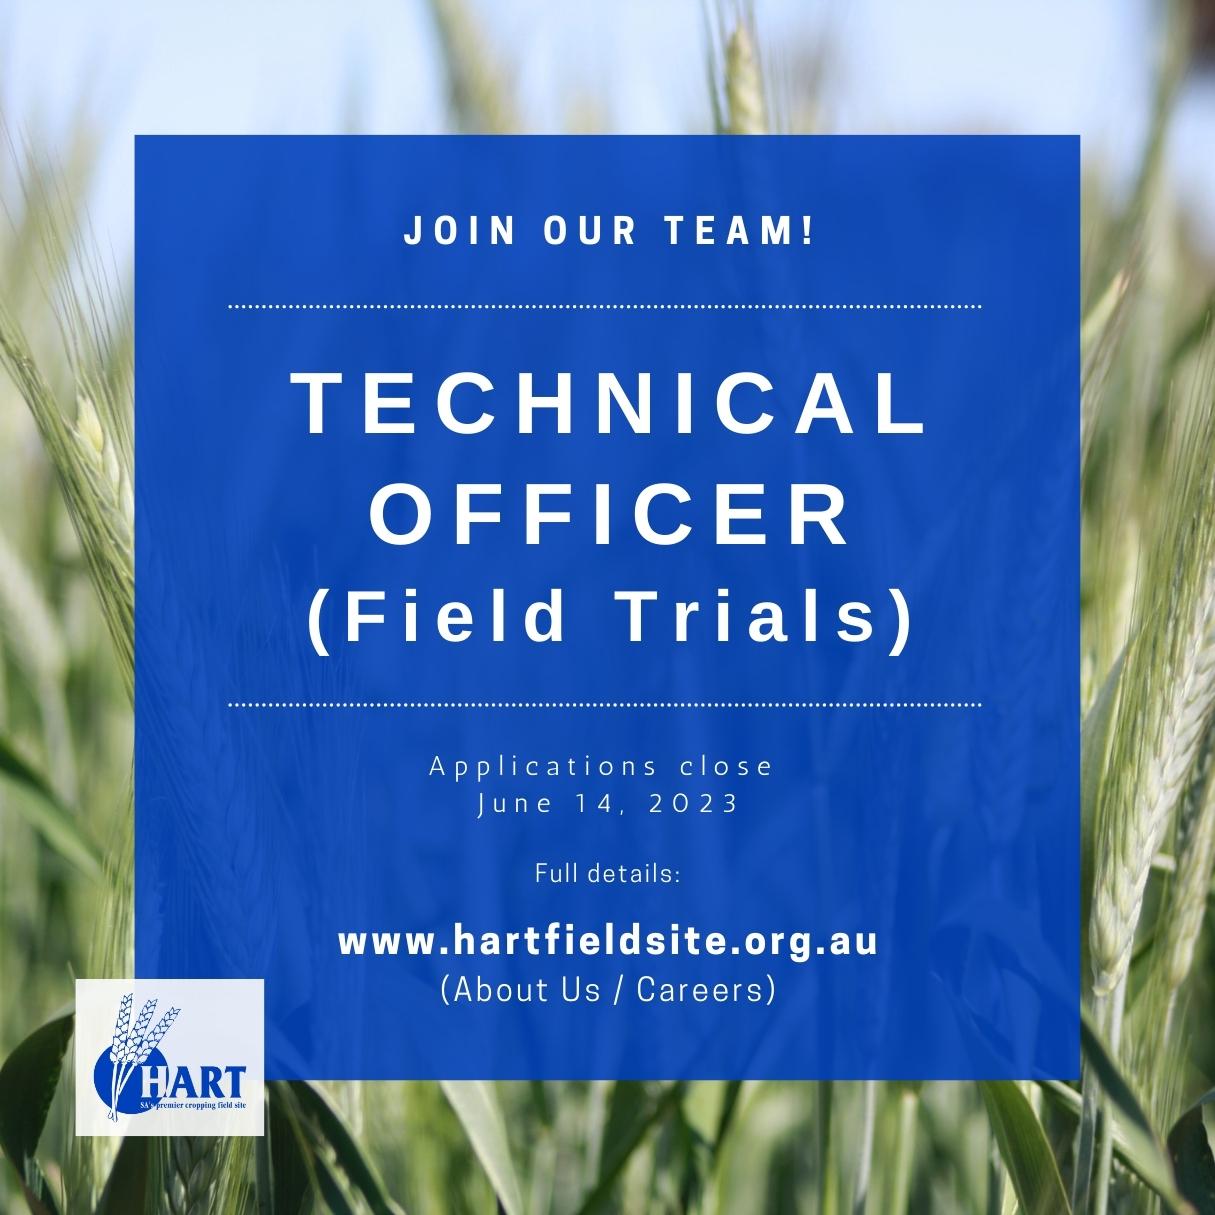 Hart - Technical Officer (Field Trials) position